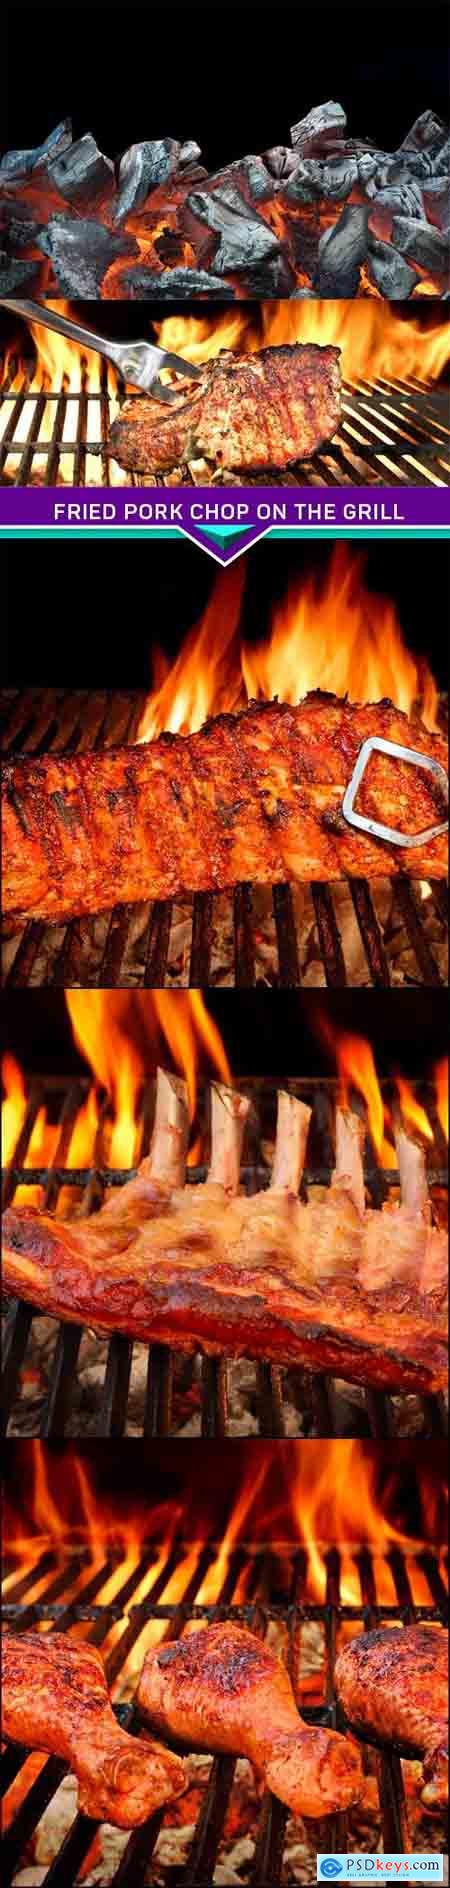 Fried pork chop on the grill 5x JPEG